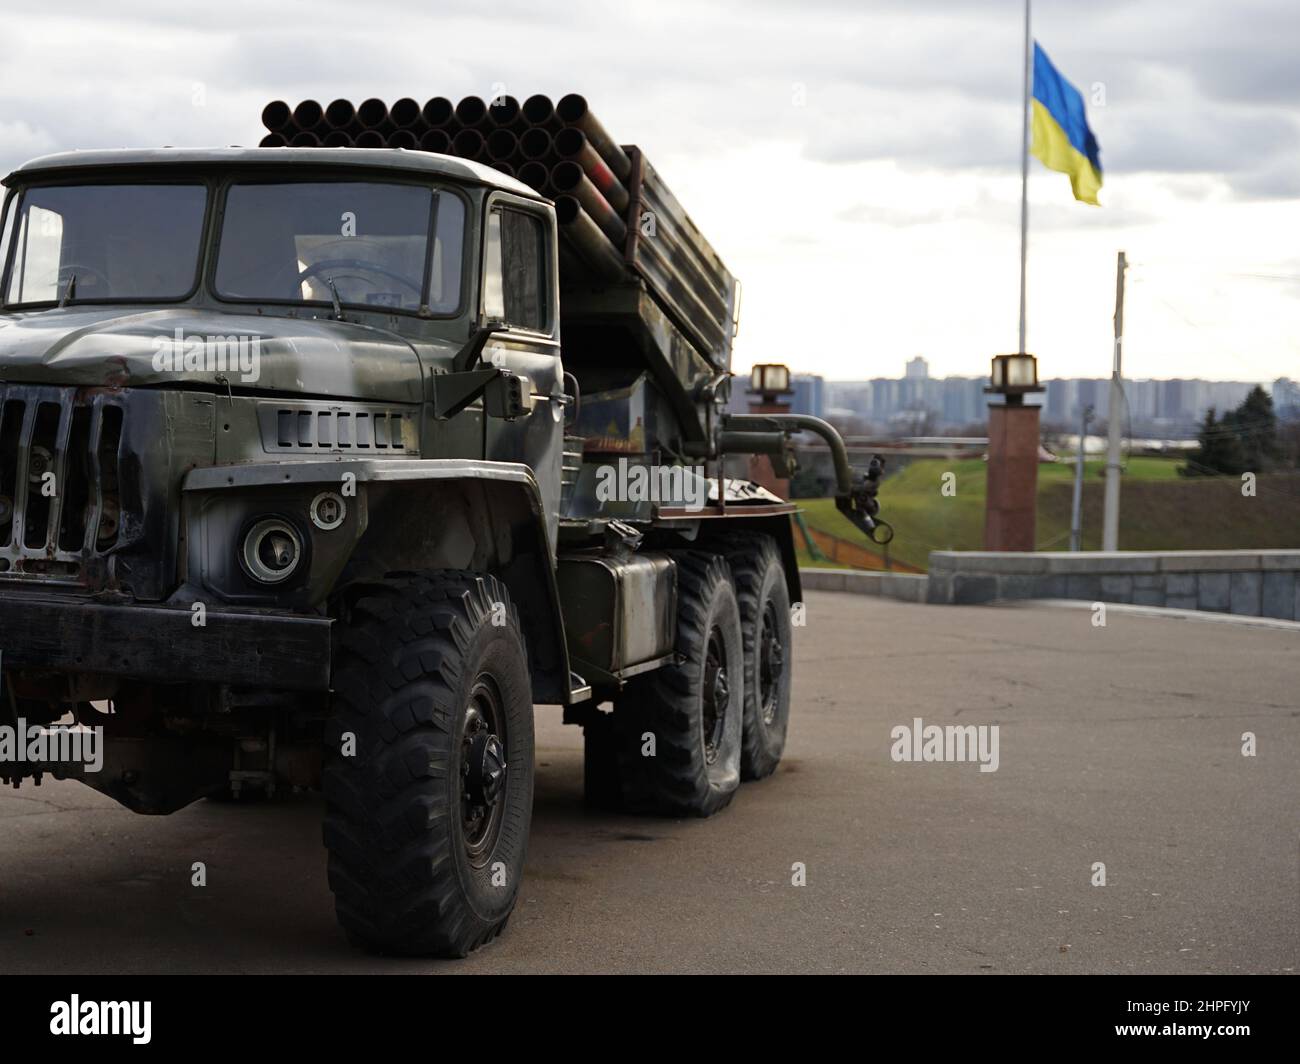 Ukraine Russia conflict war escalation concept with army troops, Katyusha multiple rocket launcher truck on display in Kyiv, Ukraine Stock Photo